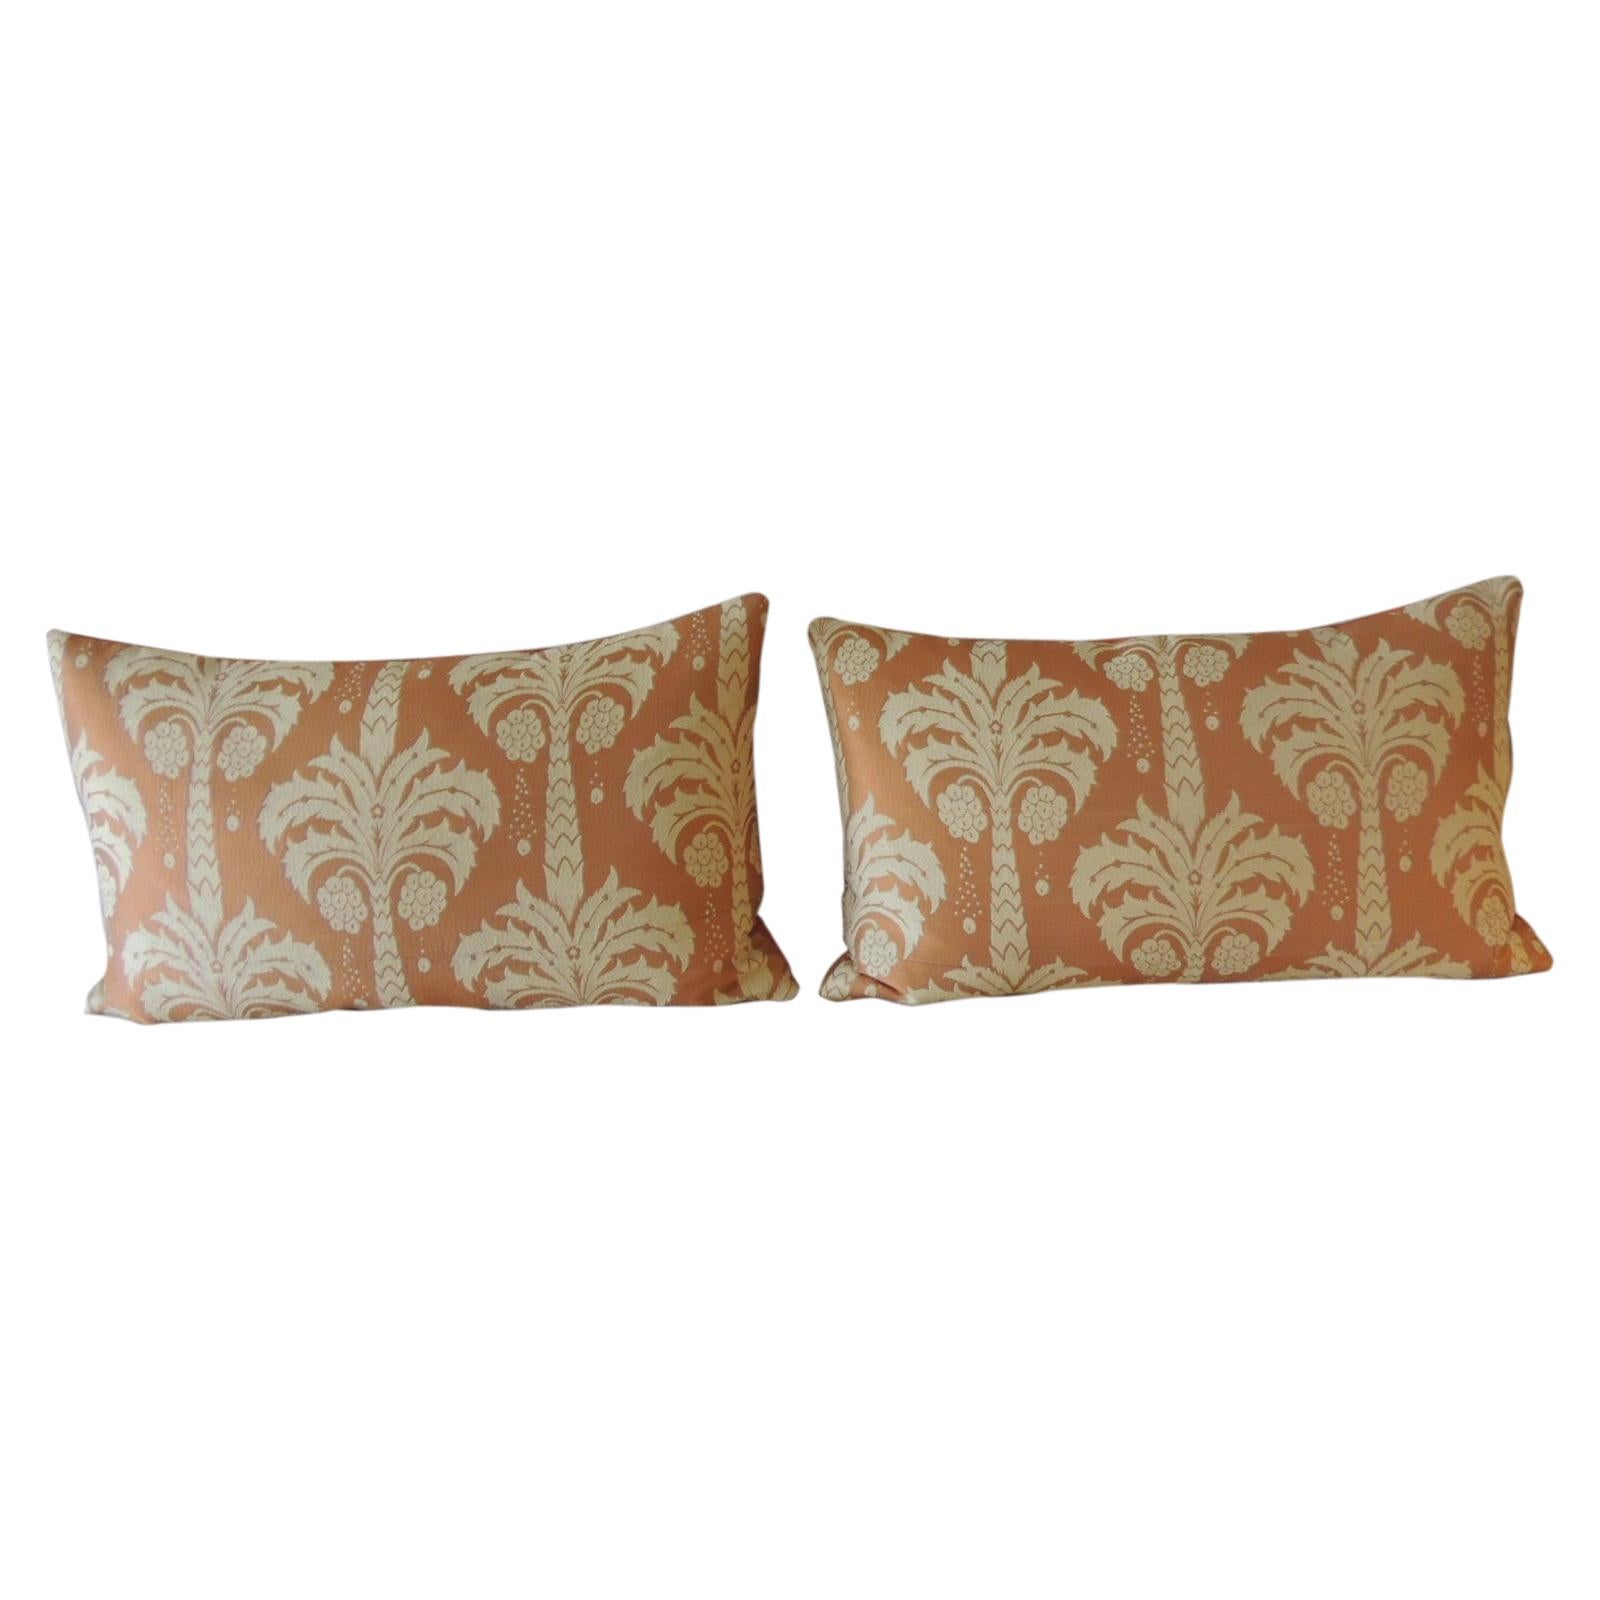 Pair of Orange and Natural "Palms" Silk Decorative Pillows